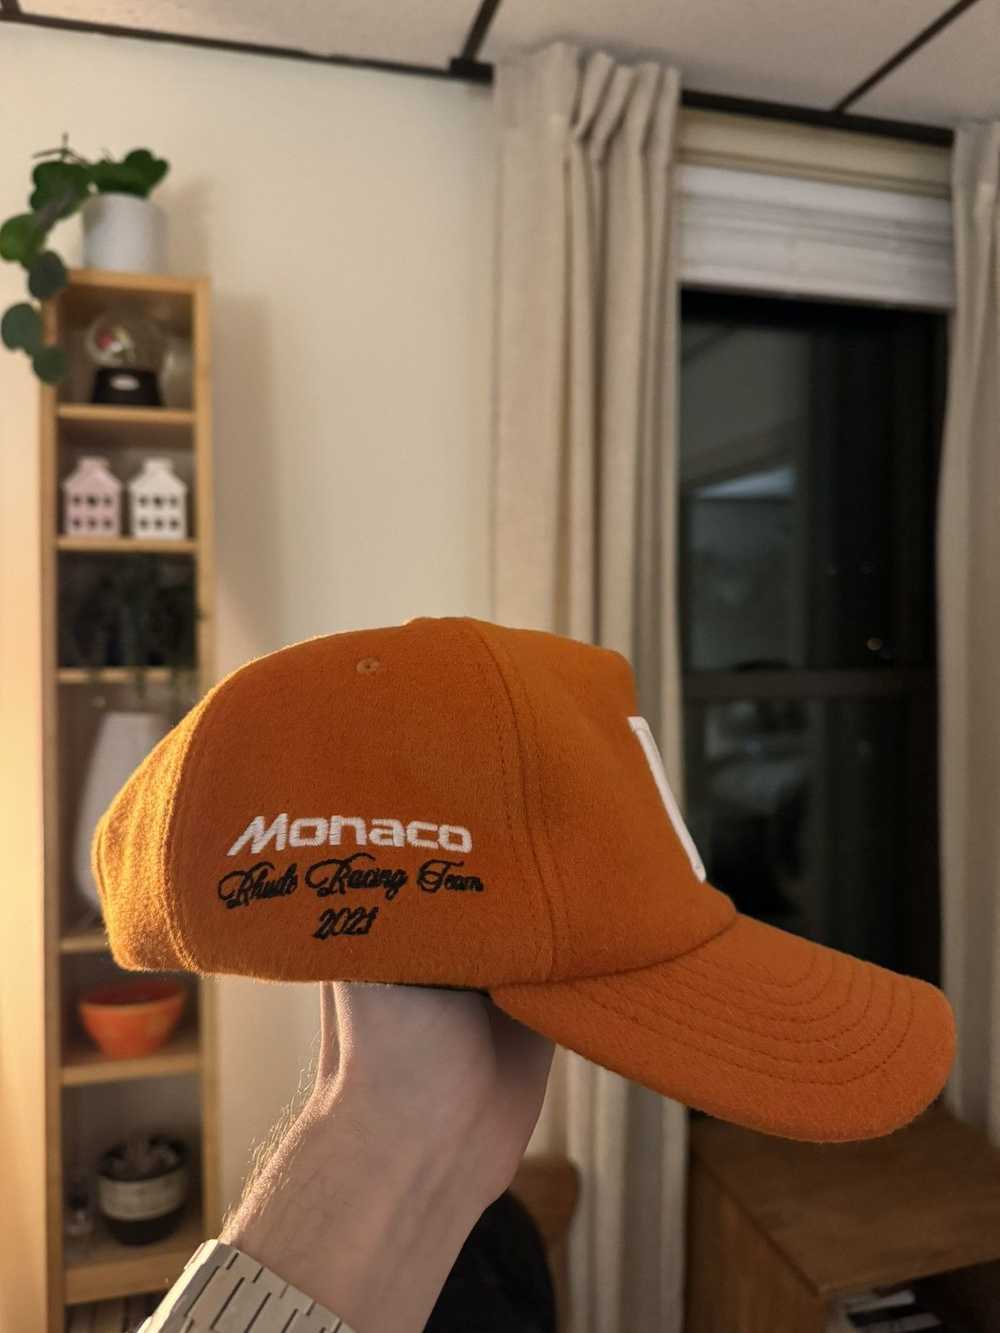 Rhude Rhude F1 McLaren Rhacing hat - image 5